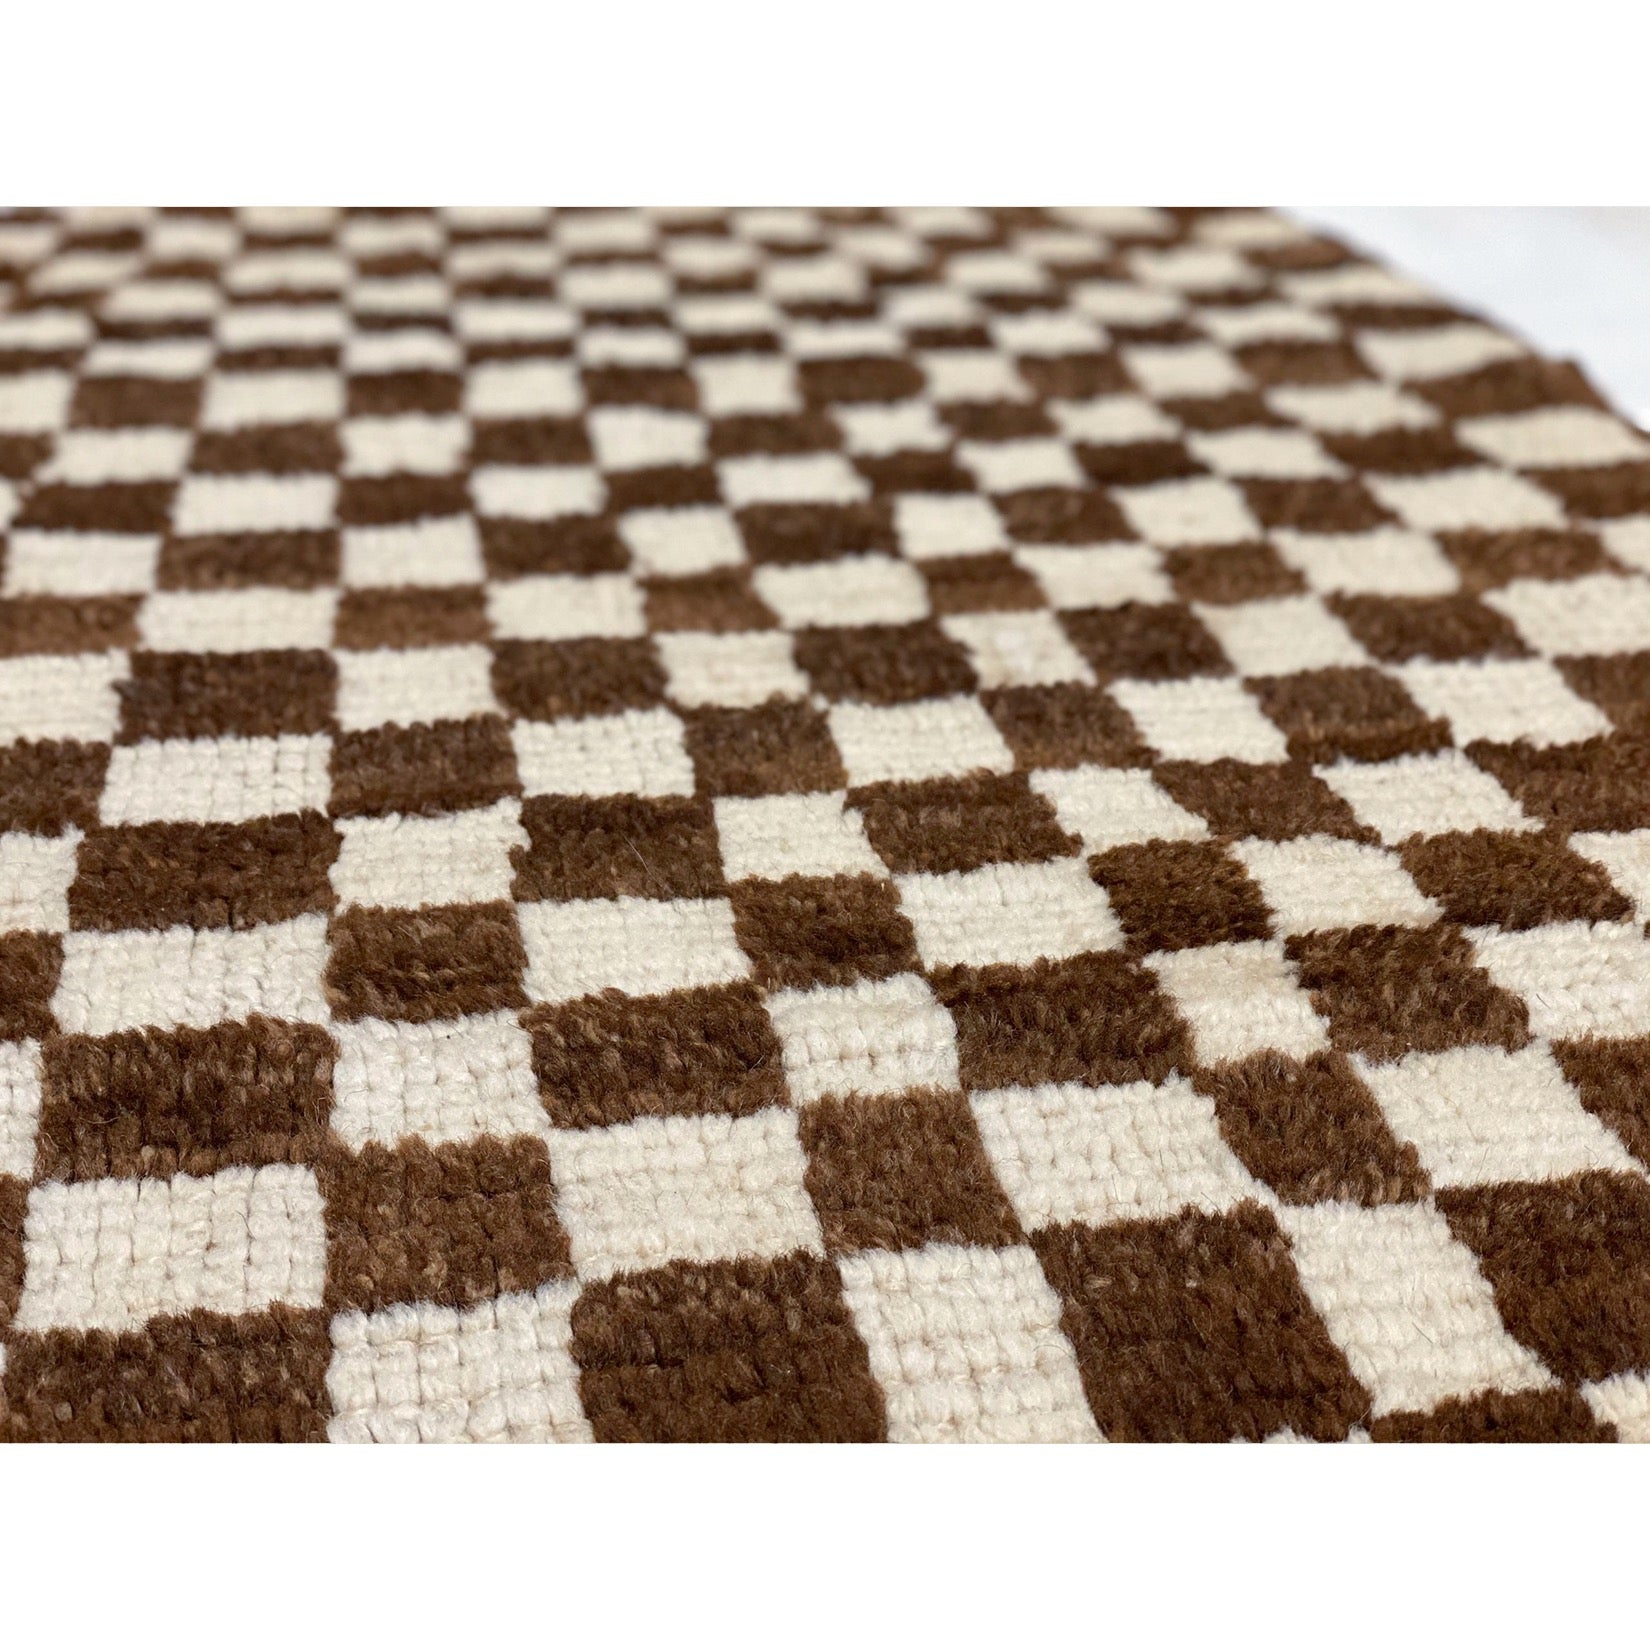 White and brown Moroccan berber rag rug - Kantara | Moroccan Rugs